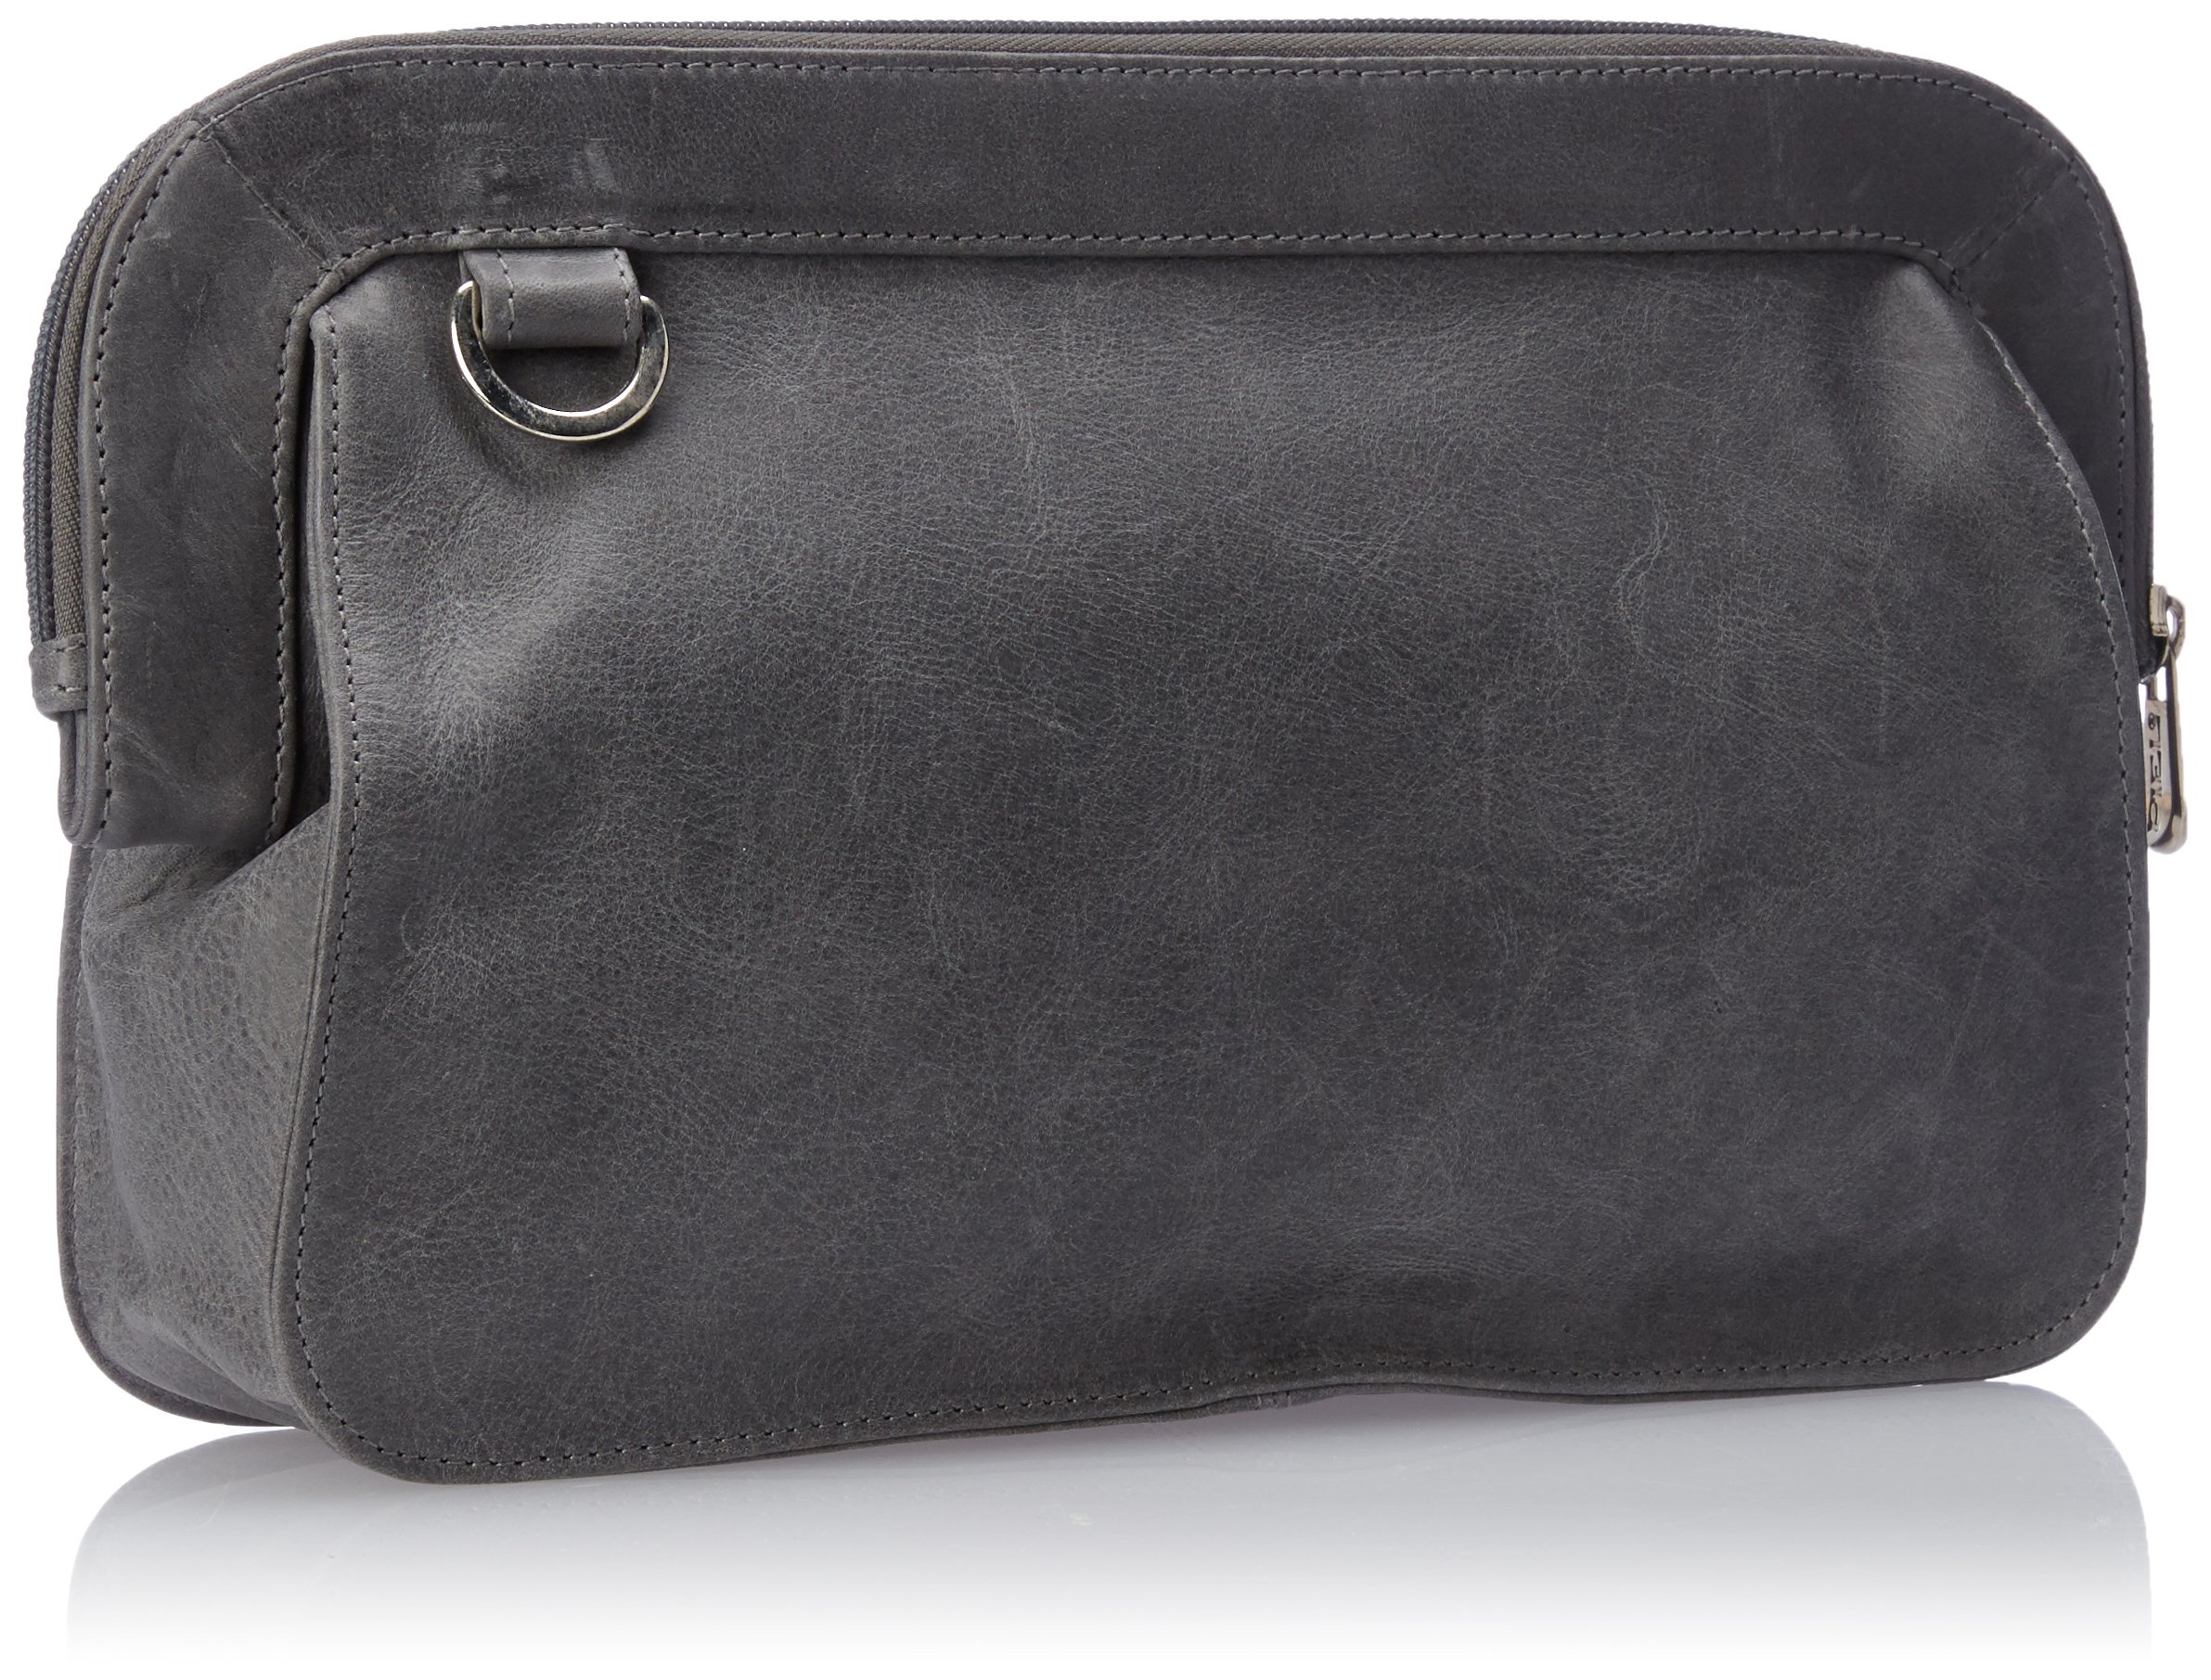 Piel Leather Convertible Handbag/Clutch/Shoulder Bag, Charcoal, One Size